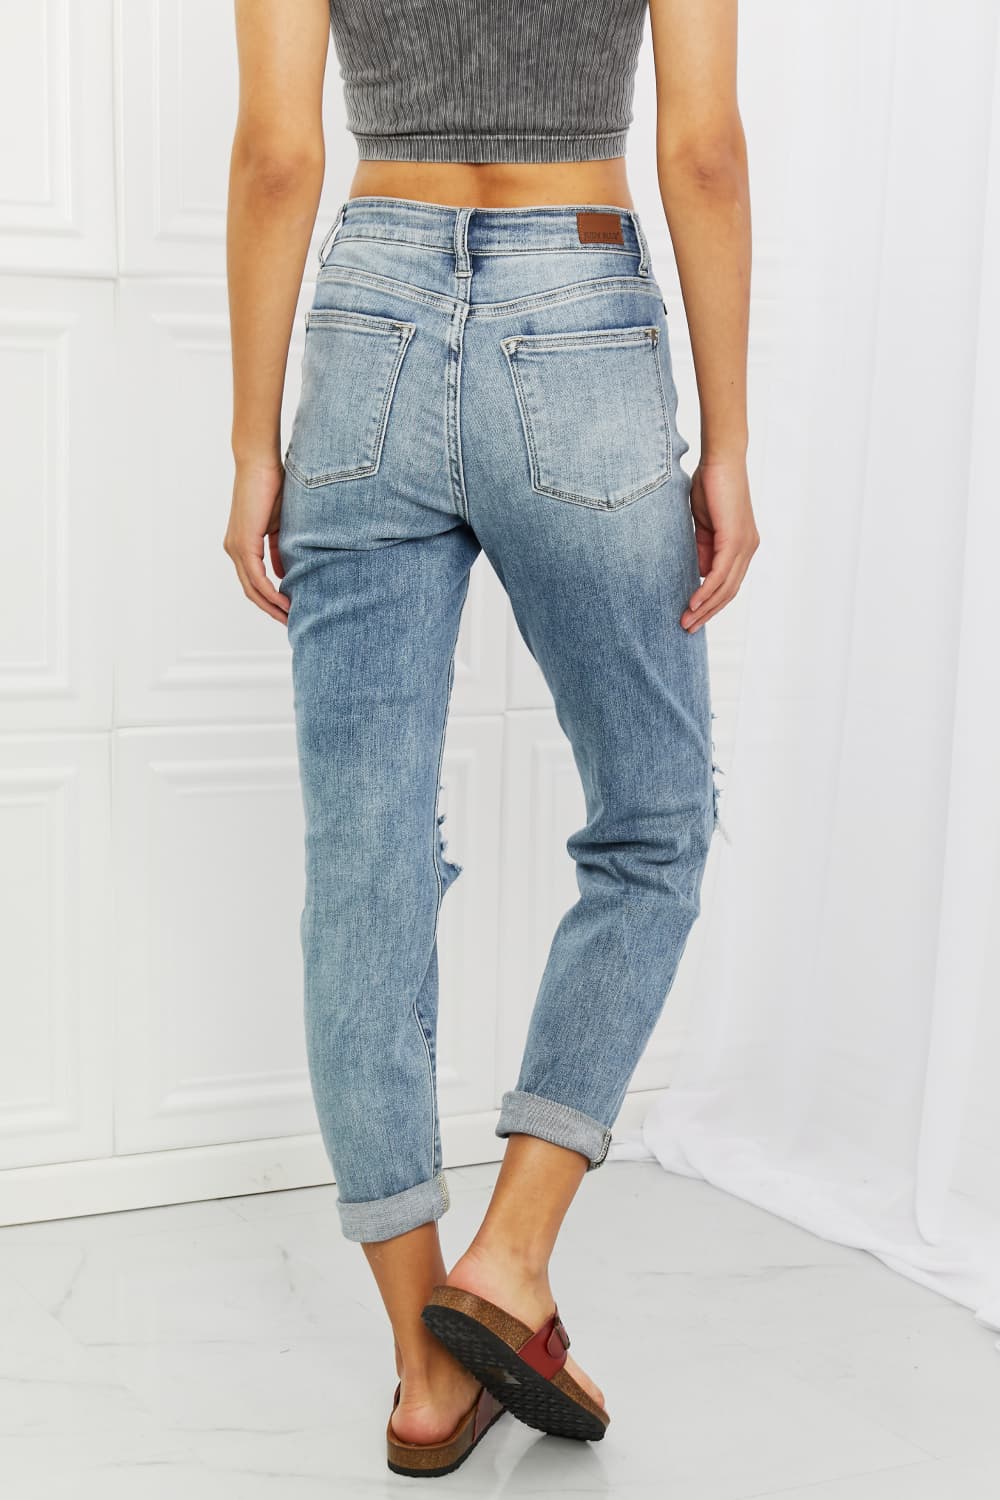 Judy Blue Malia Full Size Mid Rise Boyfriend Jeans - Cheeky Chic Boutique